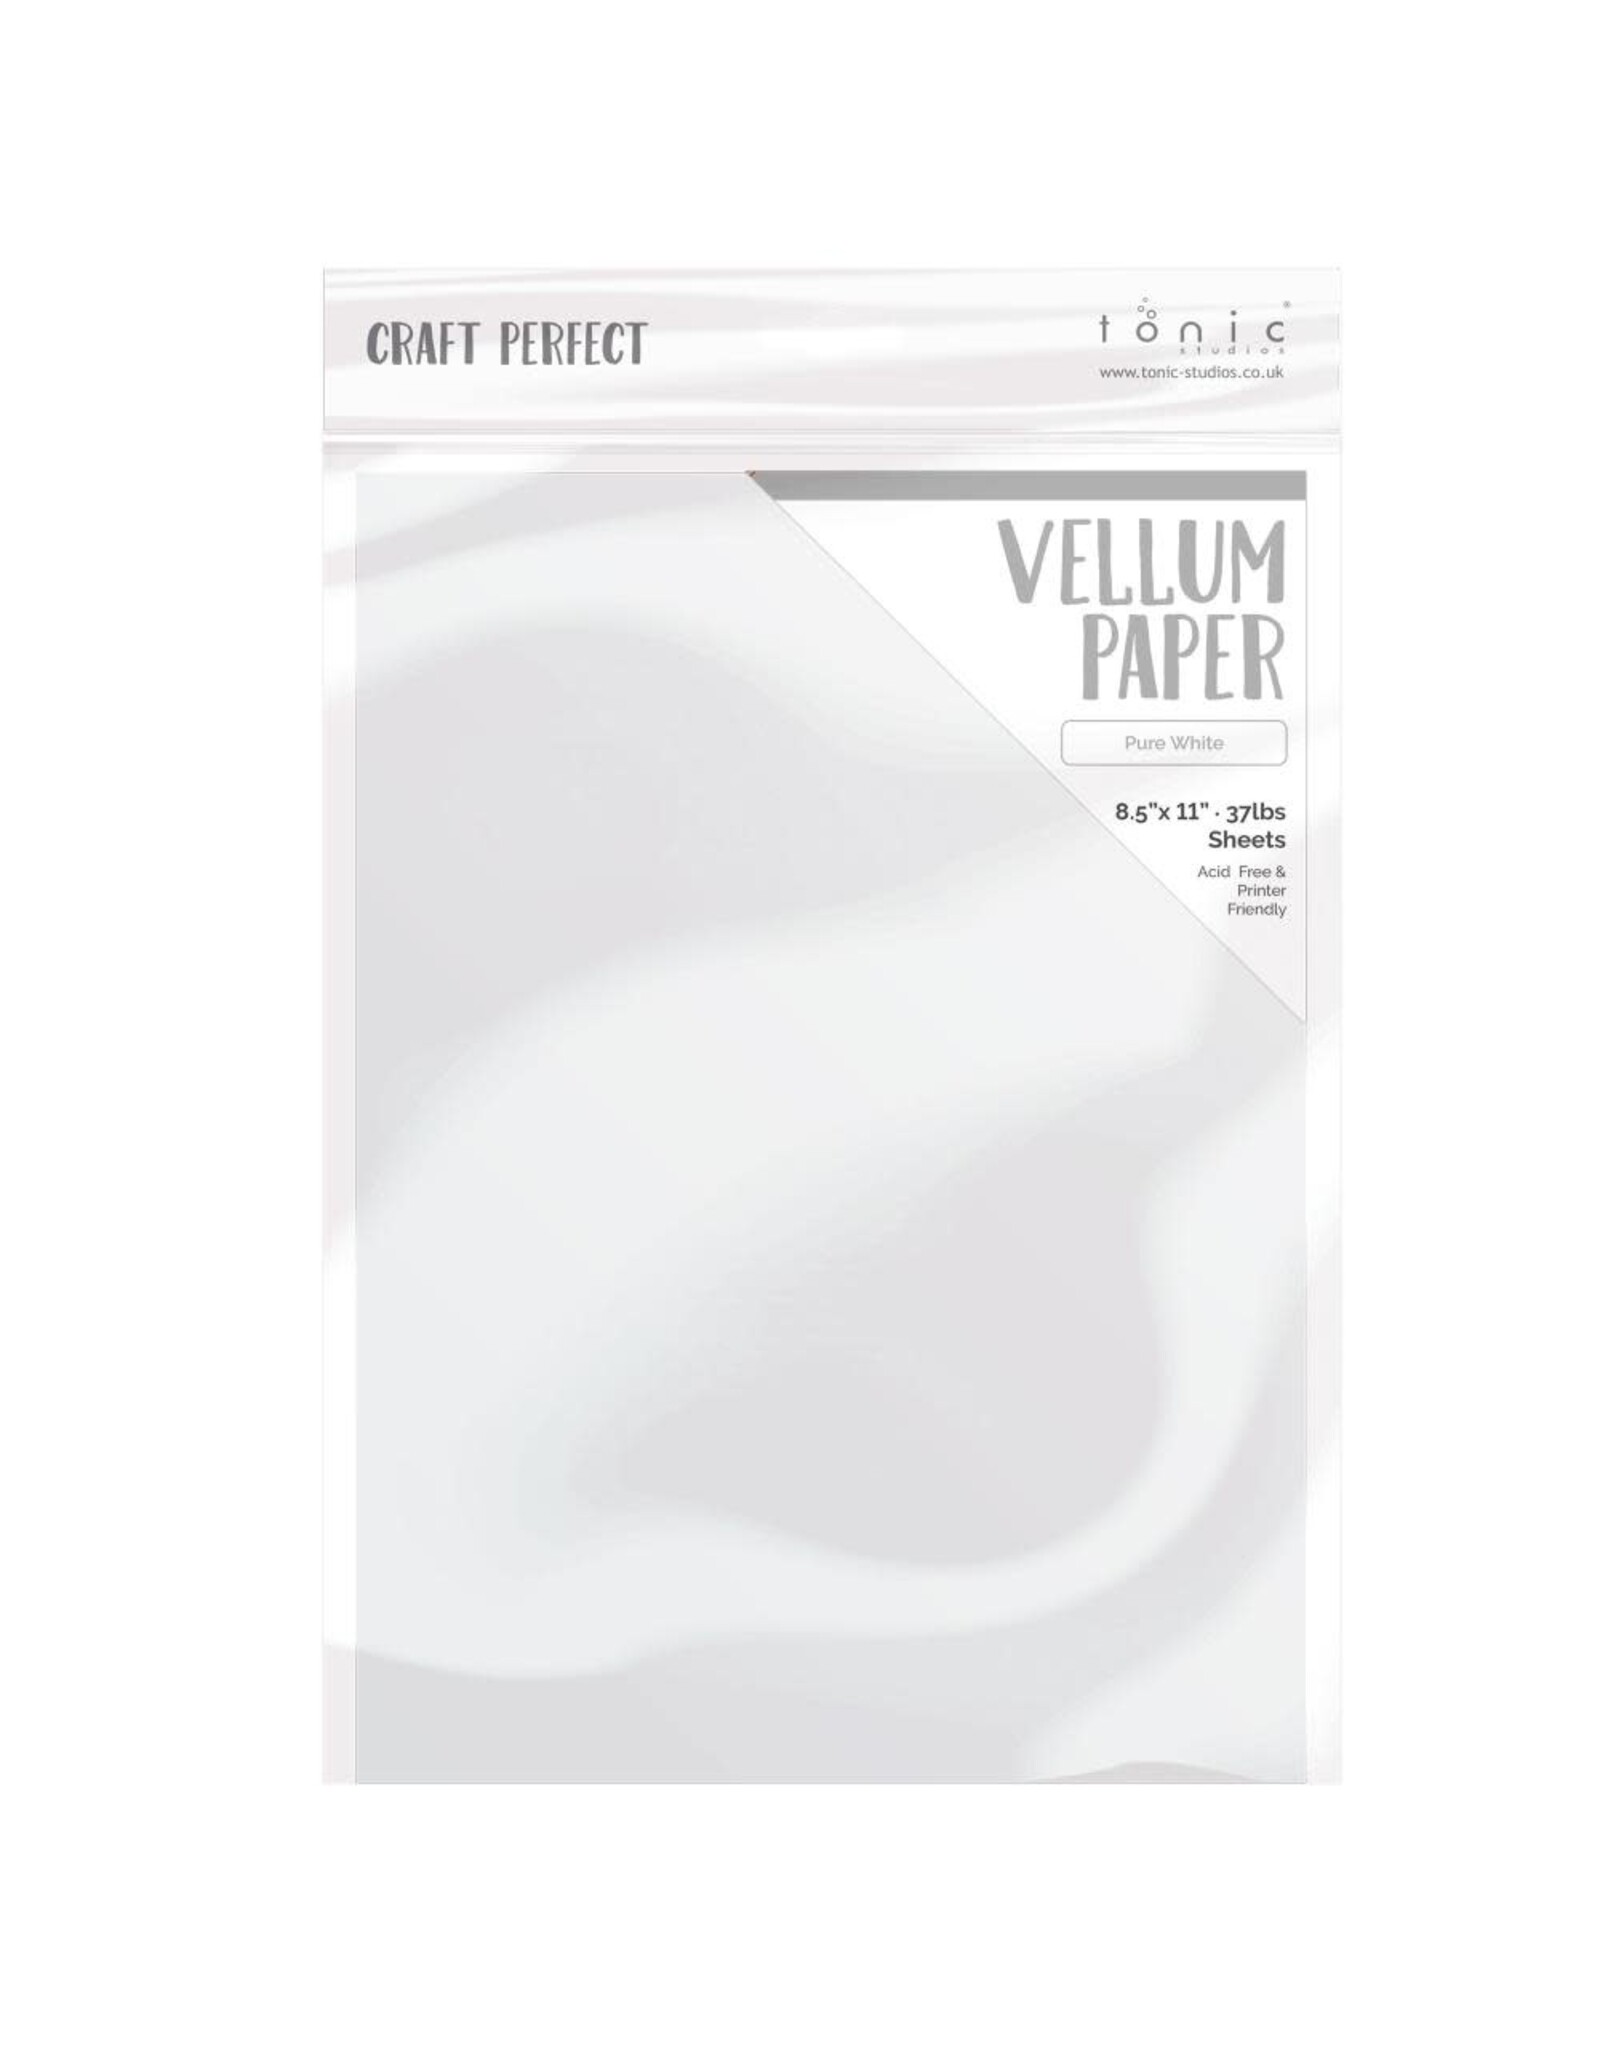 TONIC TONIC CRAFT PERFECT PURE WHITE VELLUM PAPER  8.5x11 10/PK